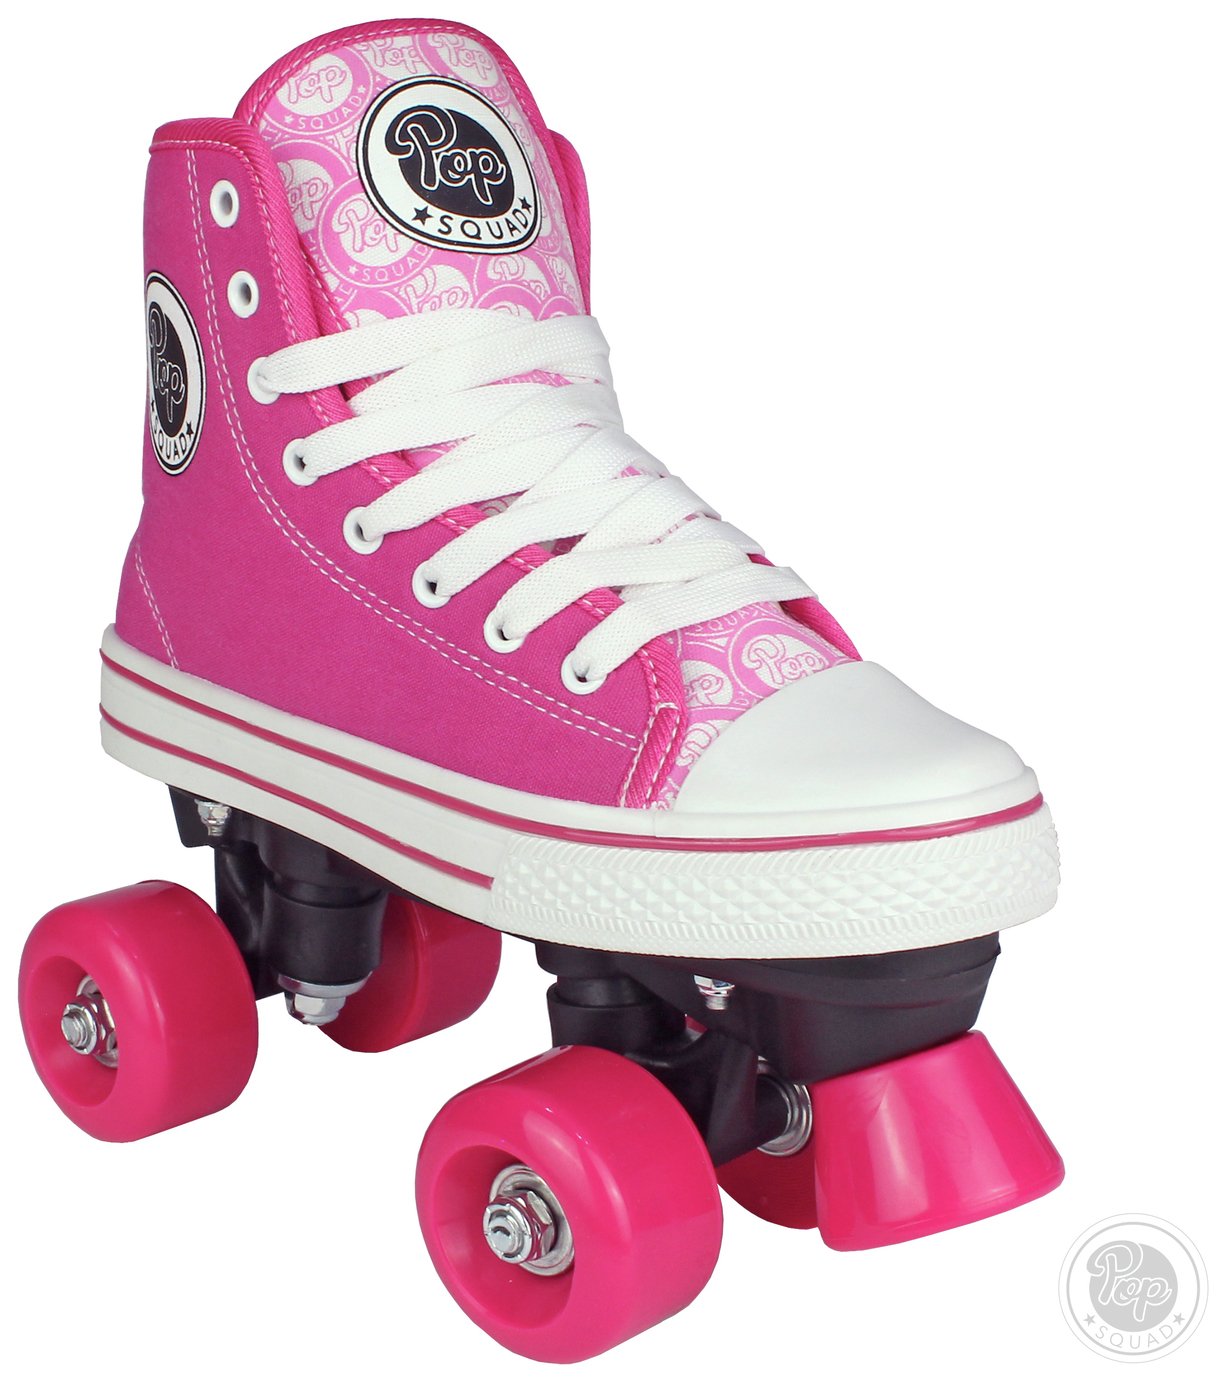 Pop Squad Pink Midtown Quad Skate - Size Junior 13